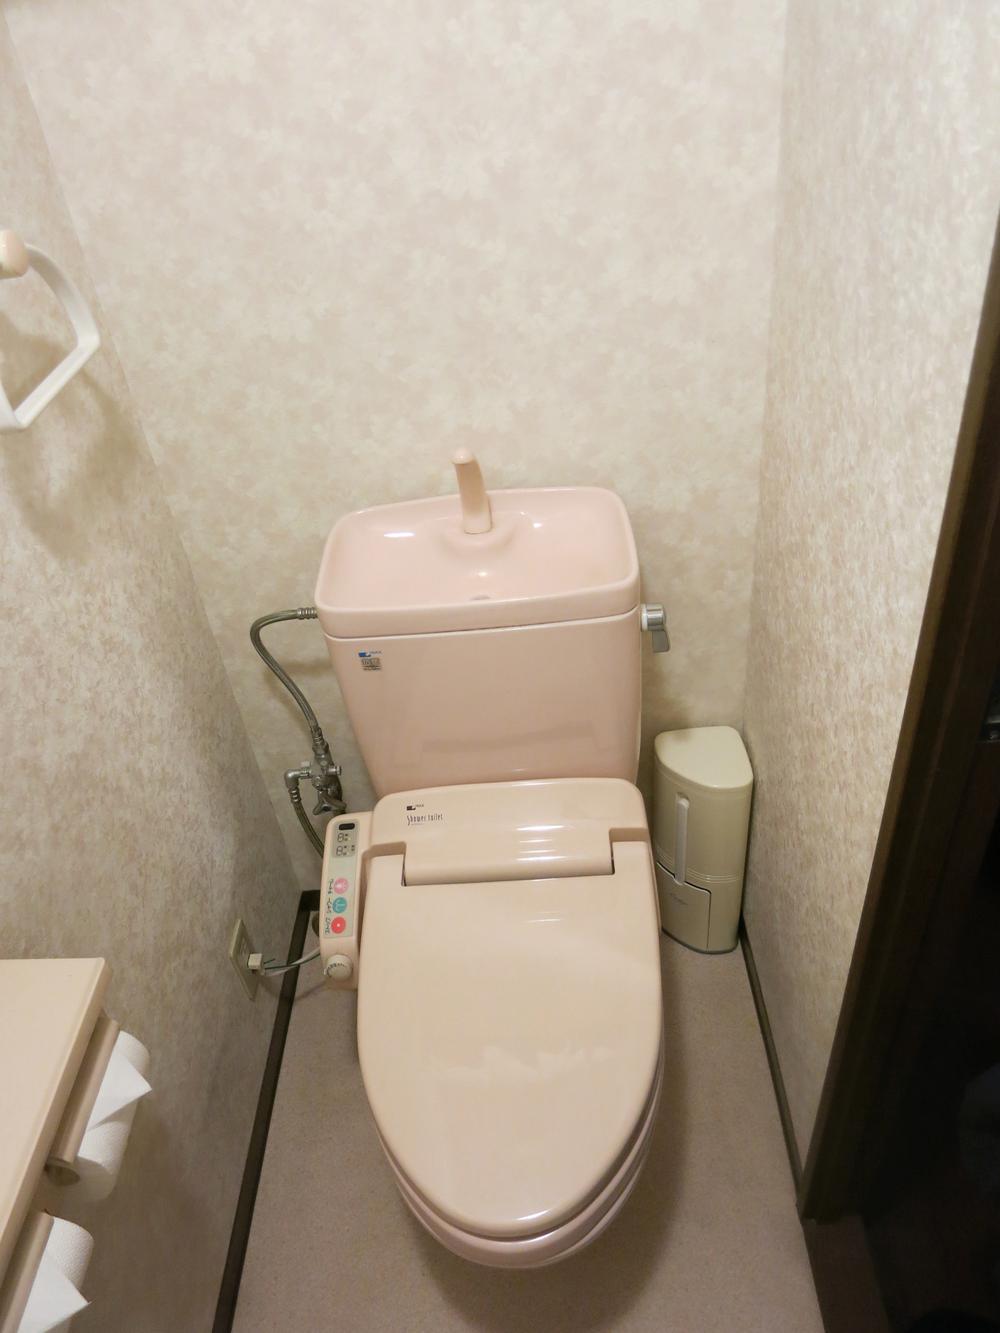 Toilet. (November 2013) Shooting